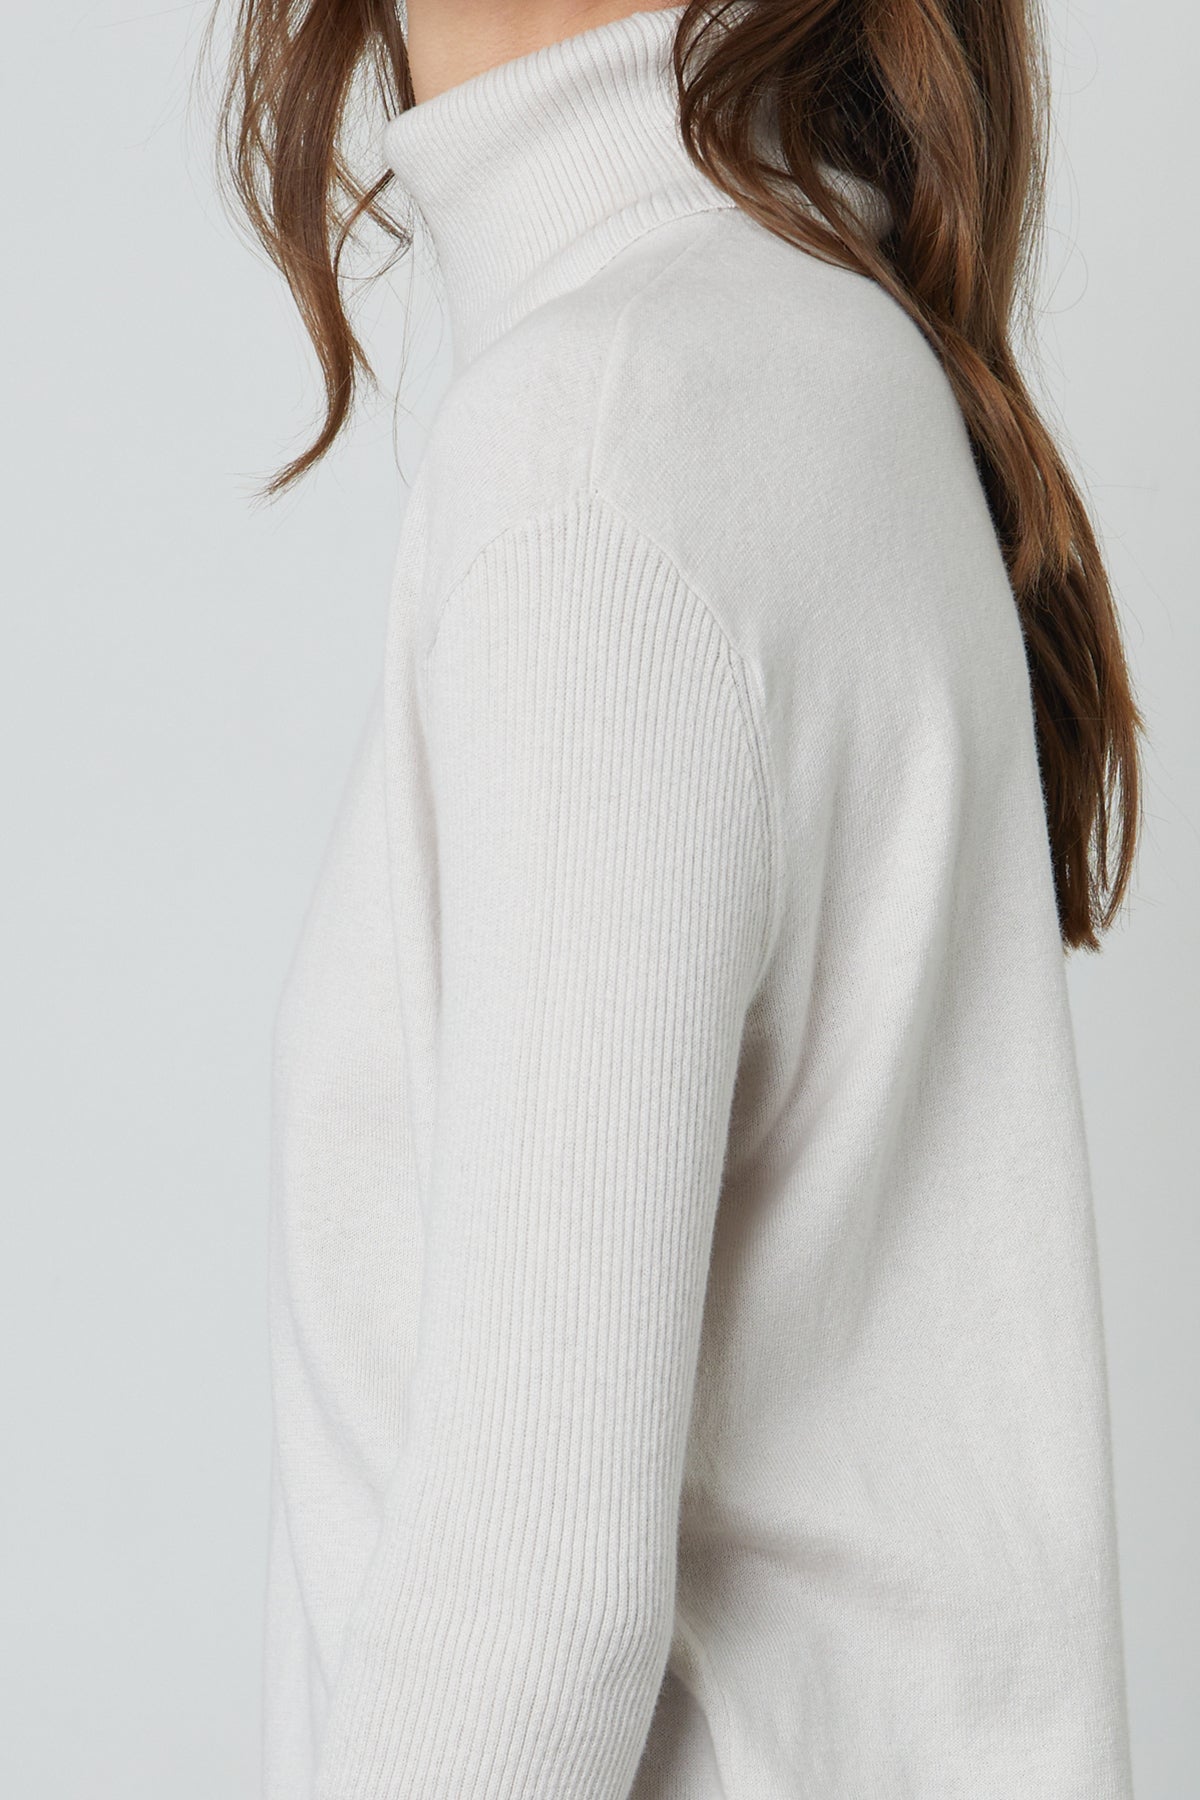   Lux Cotton Cashmere Renny Turtleneck Sweater side and shoulder detail 